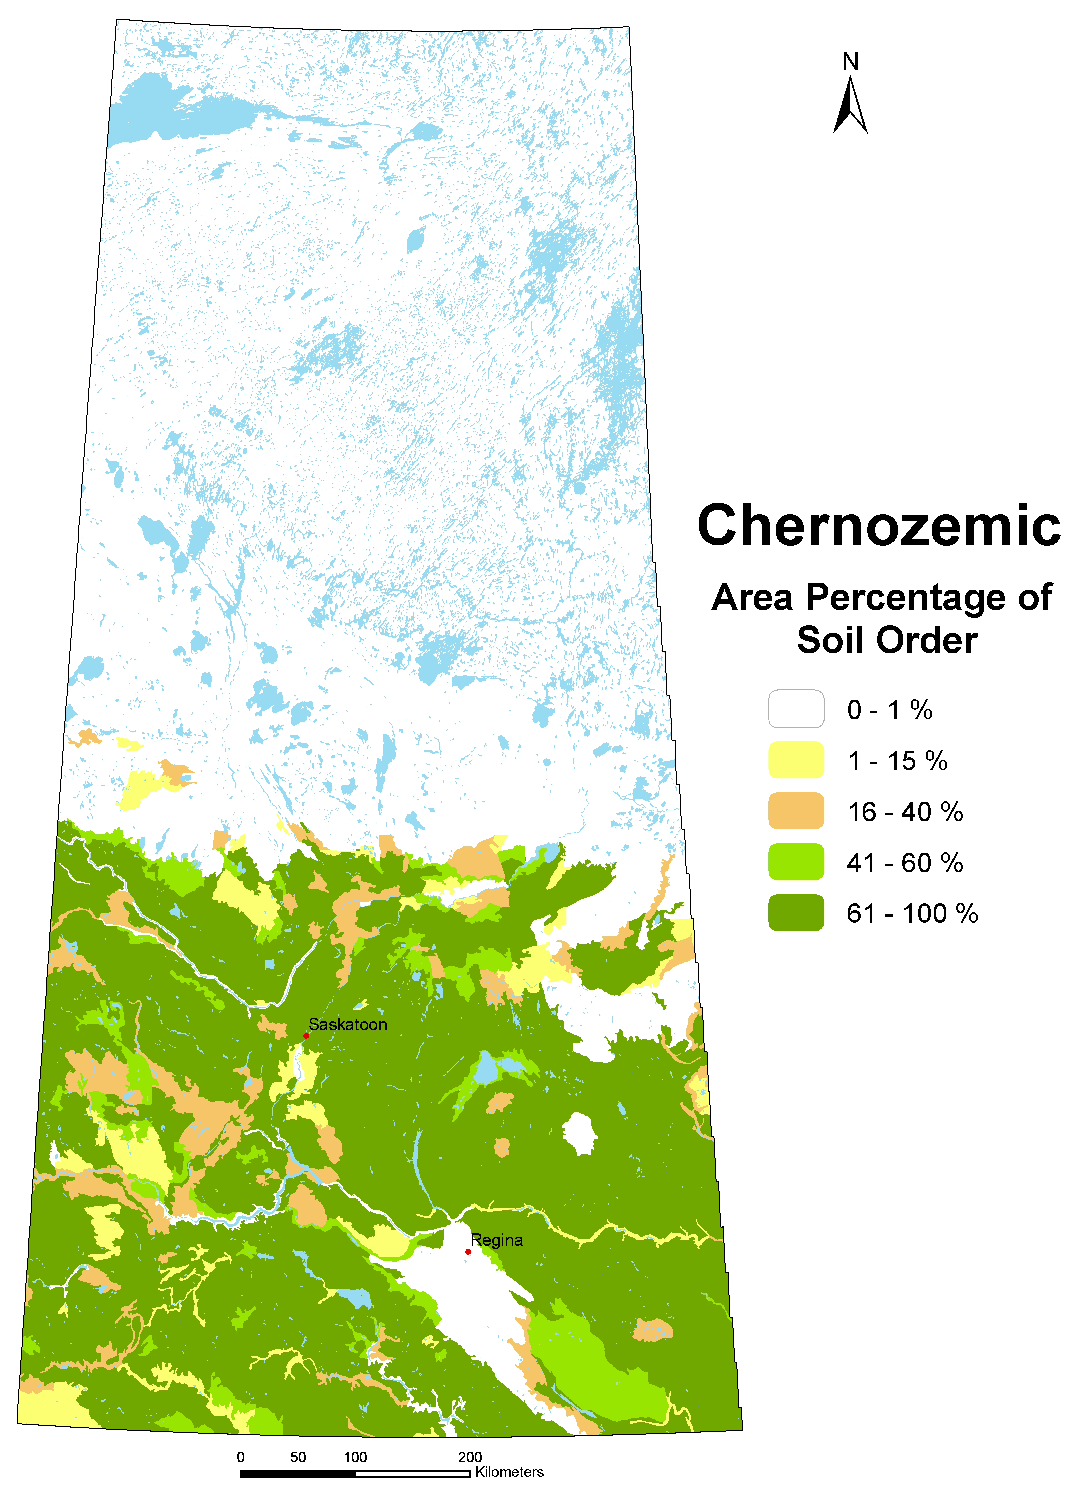 Distribution of Chernozemic soils in Saskatchewan